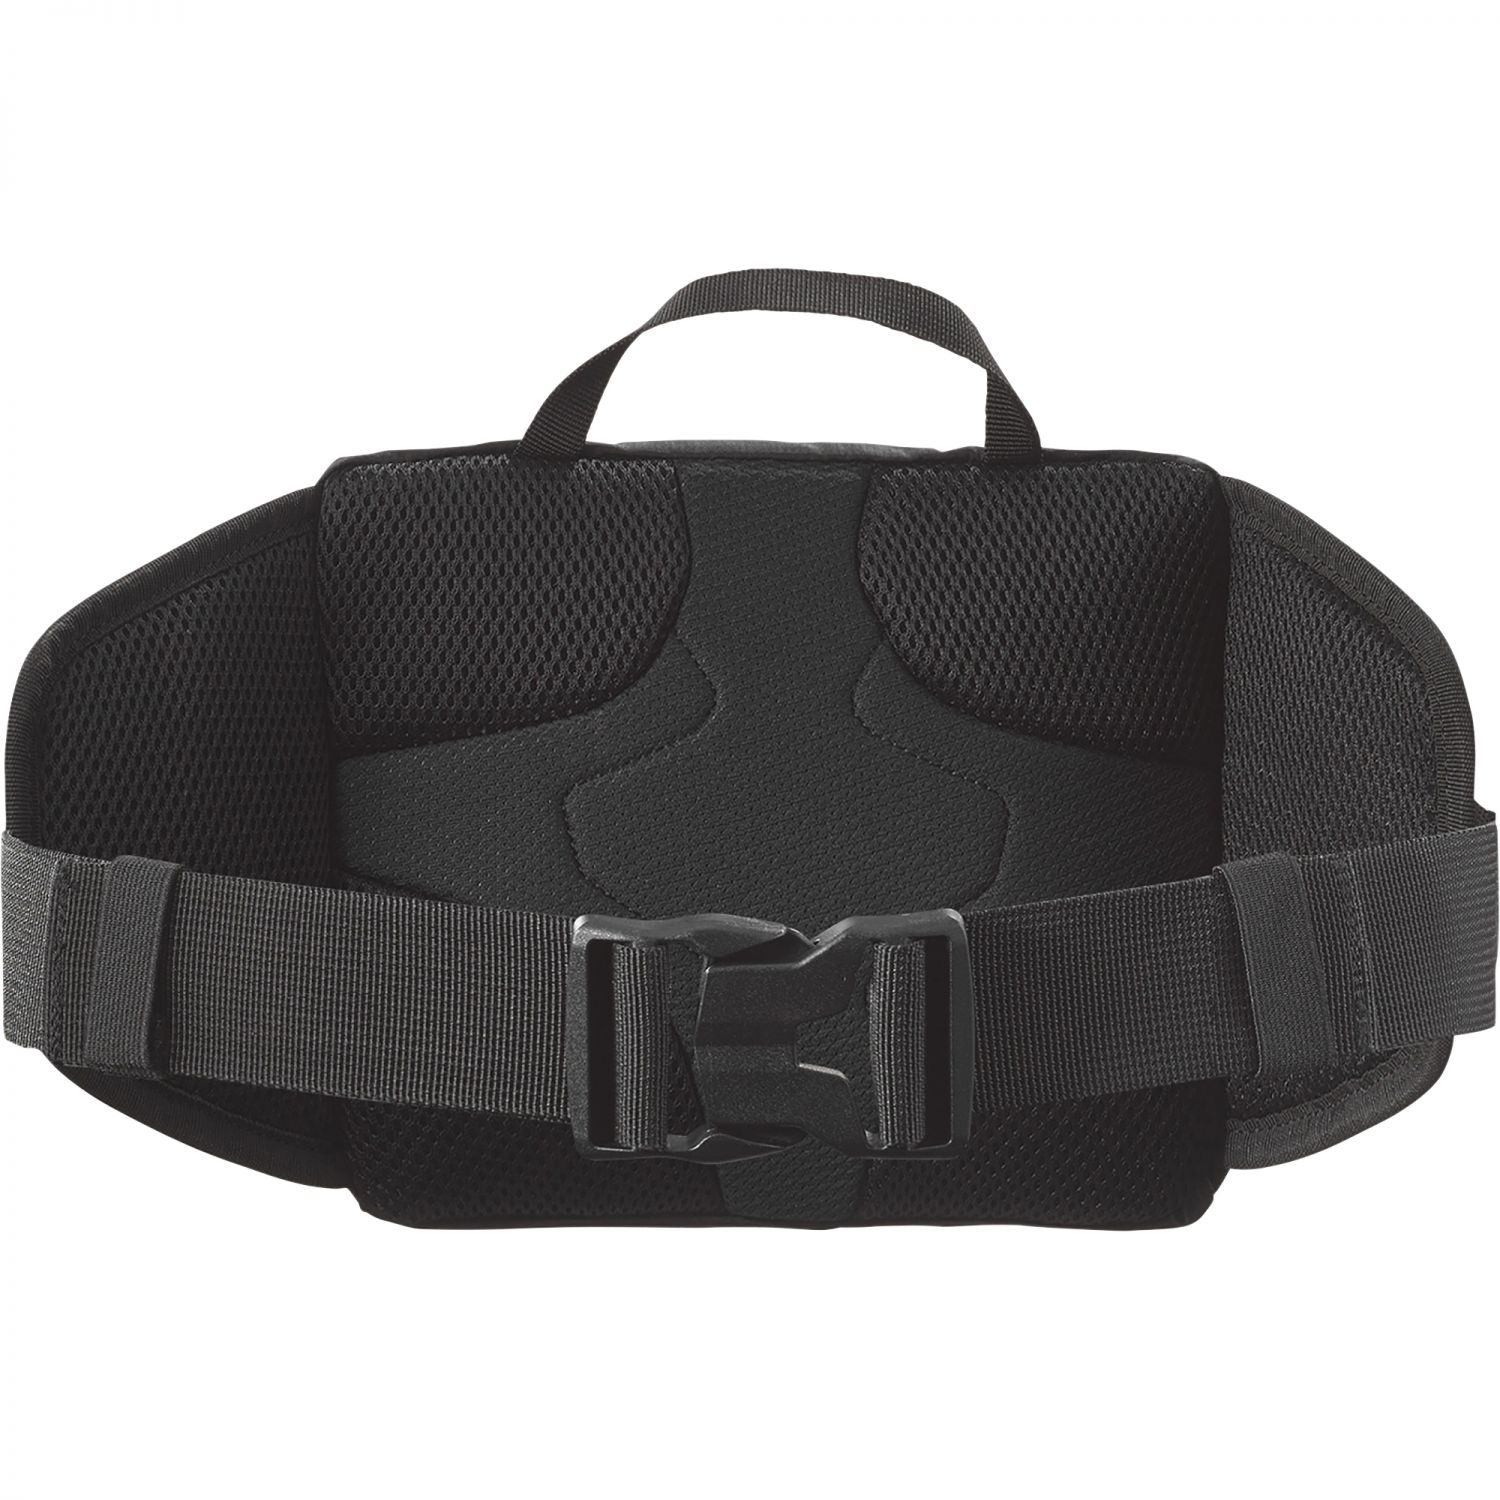 Salomon Trailblazer Belt, ceinture de running, noir